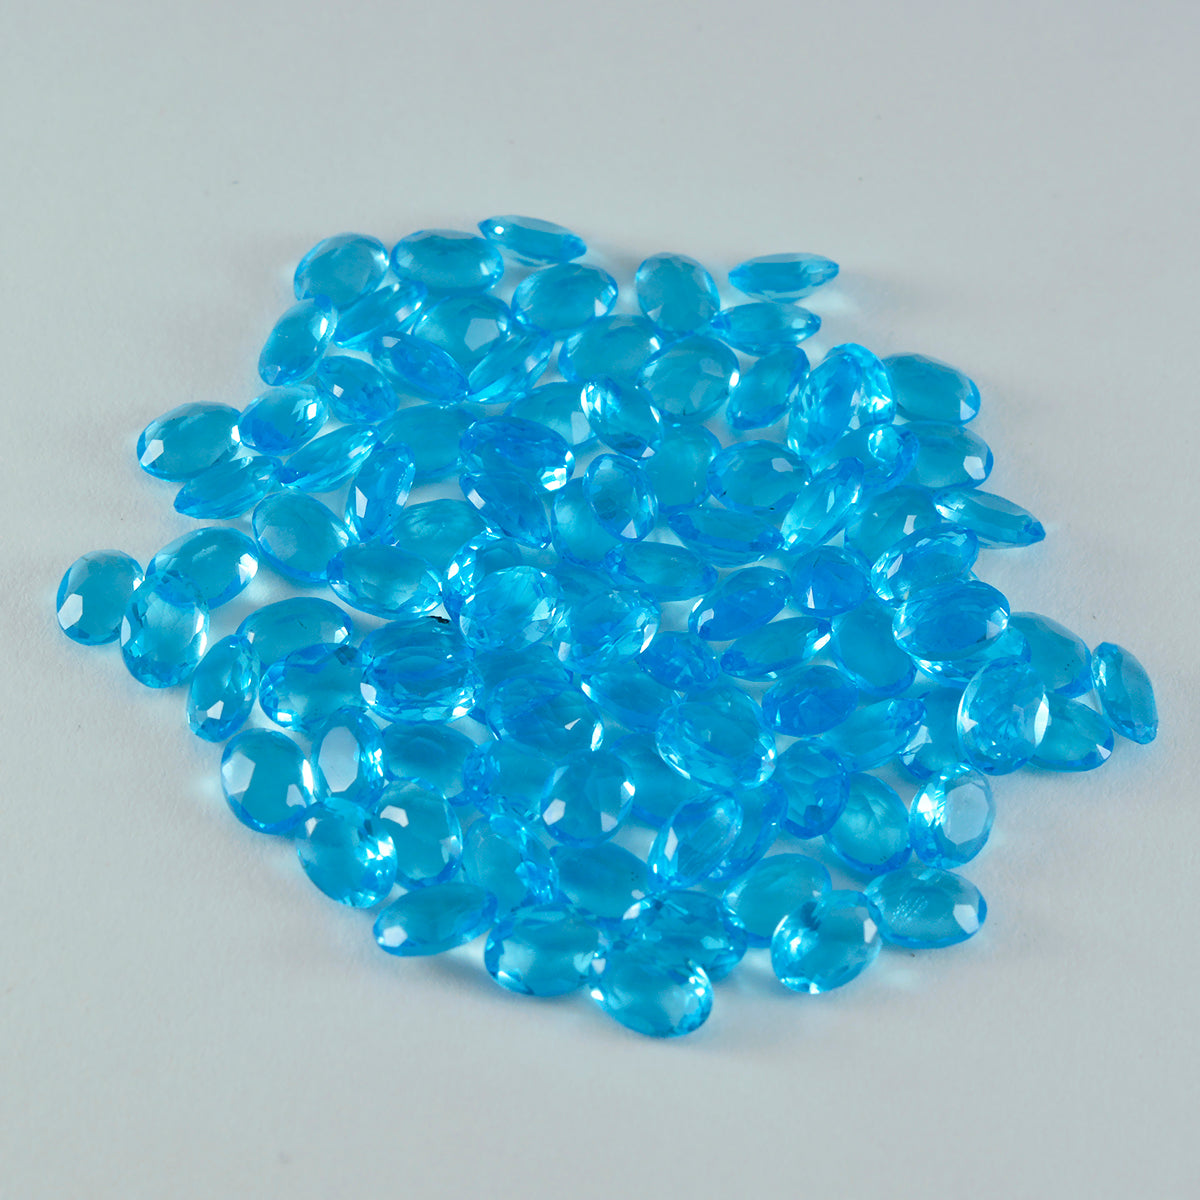 Riyogems 1PC Blue Topaz CZ Faceted 3x5 mm Oval Shape A+1 Quality Loose Gemstone